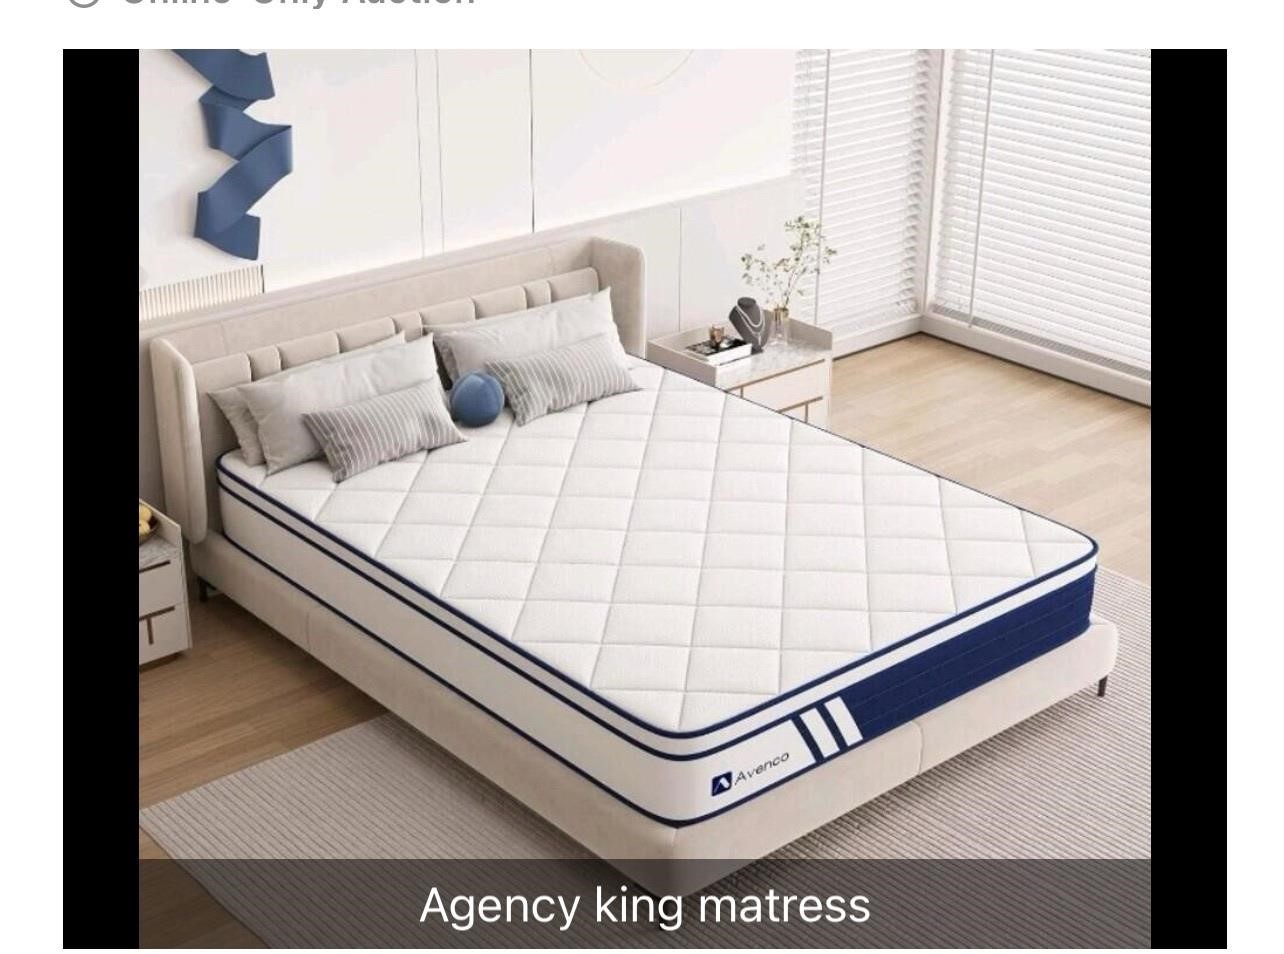 Agency king mattress